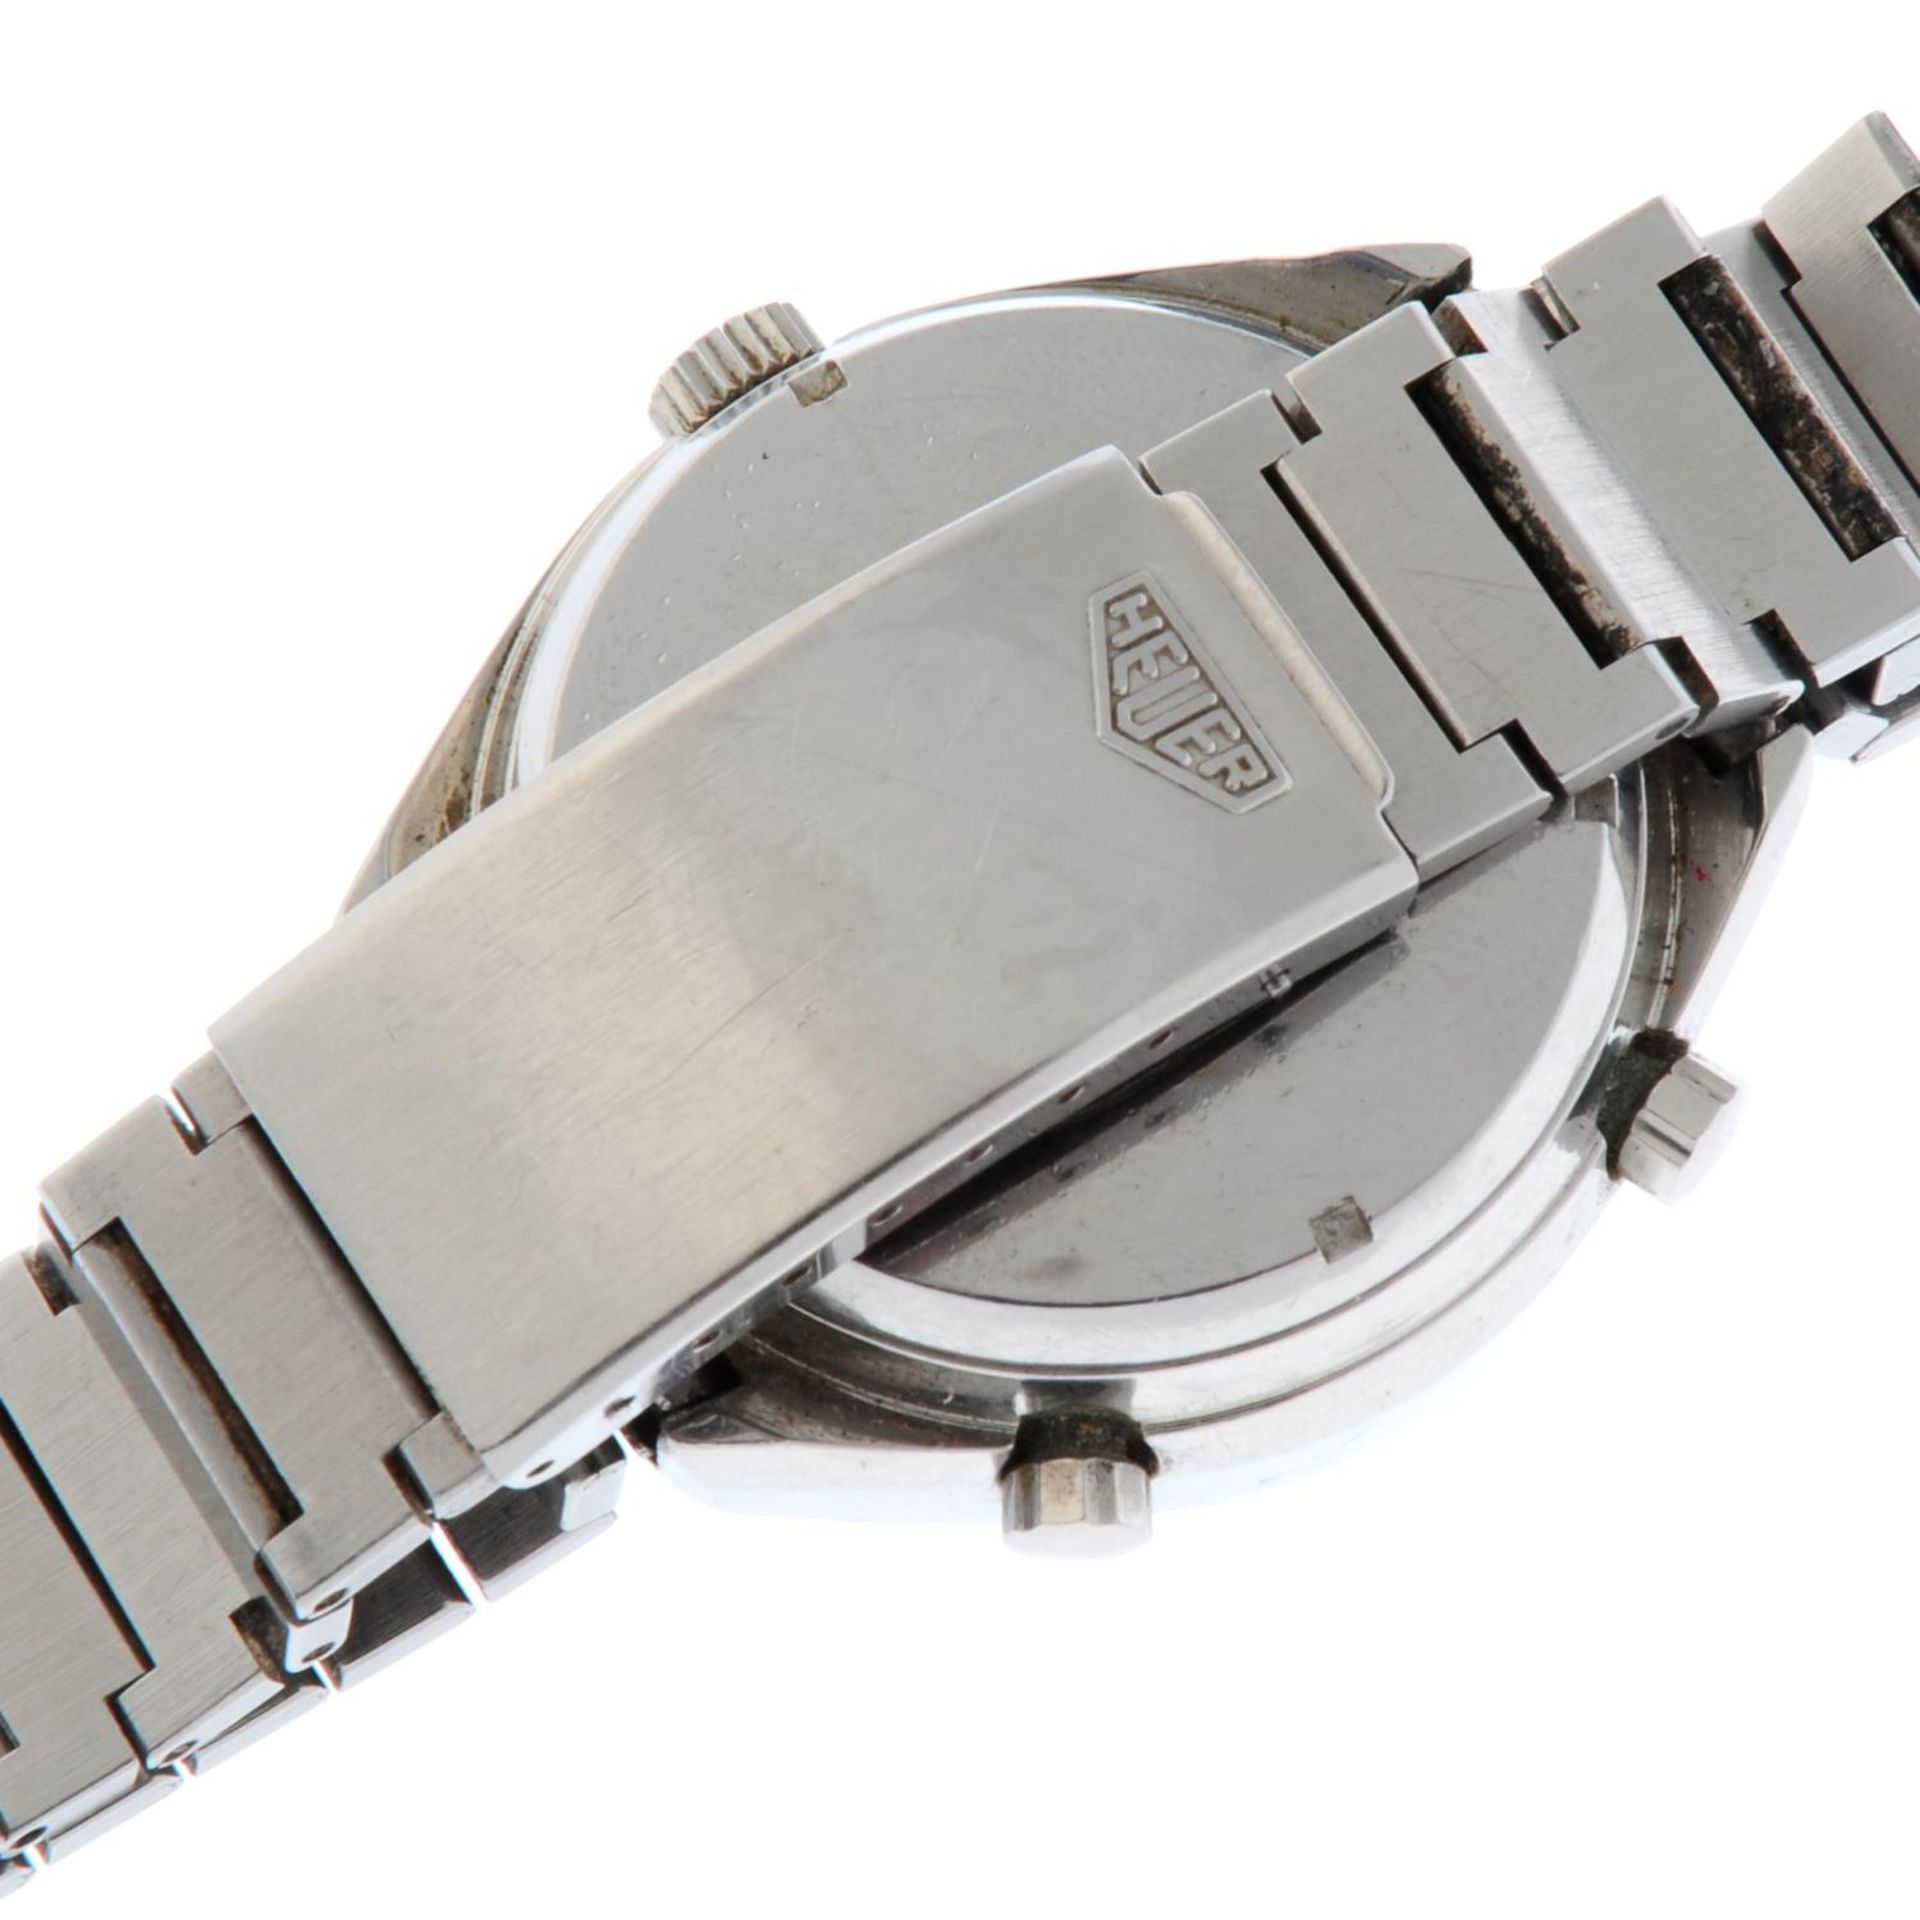 HEUER - a Carrera chronograph bracelet watch. - Image 2 of 6